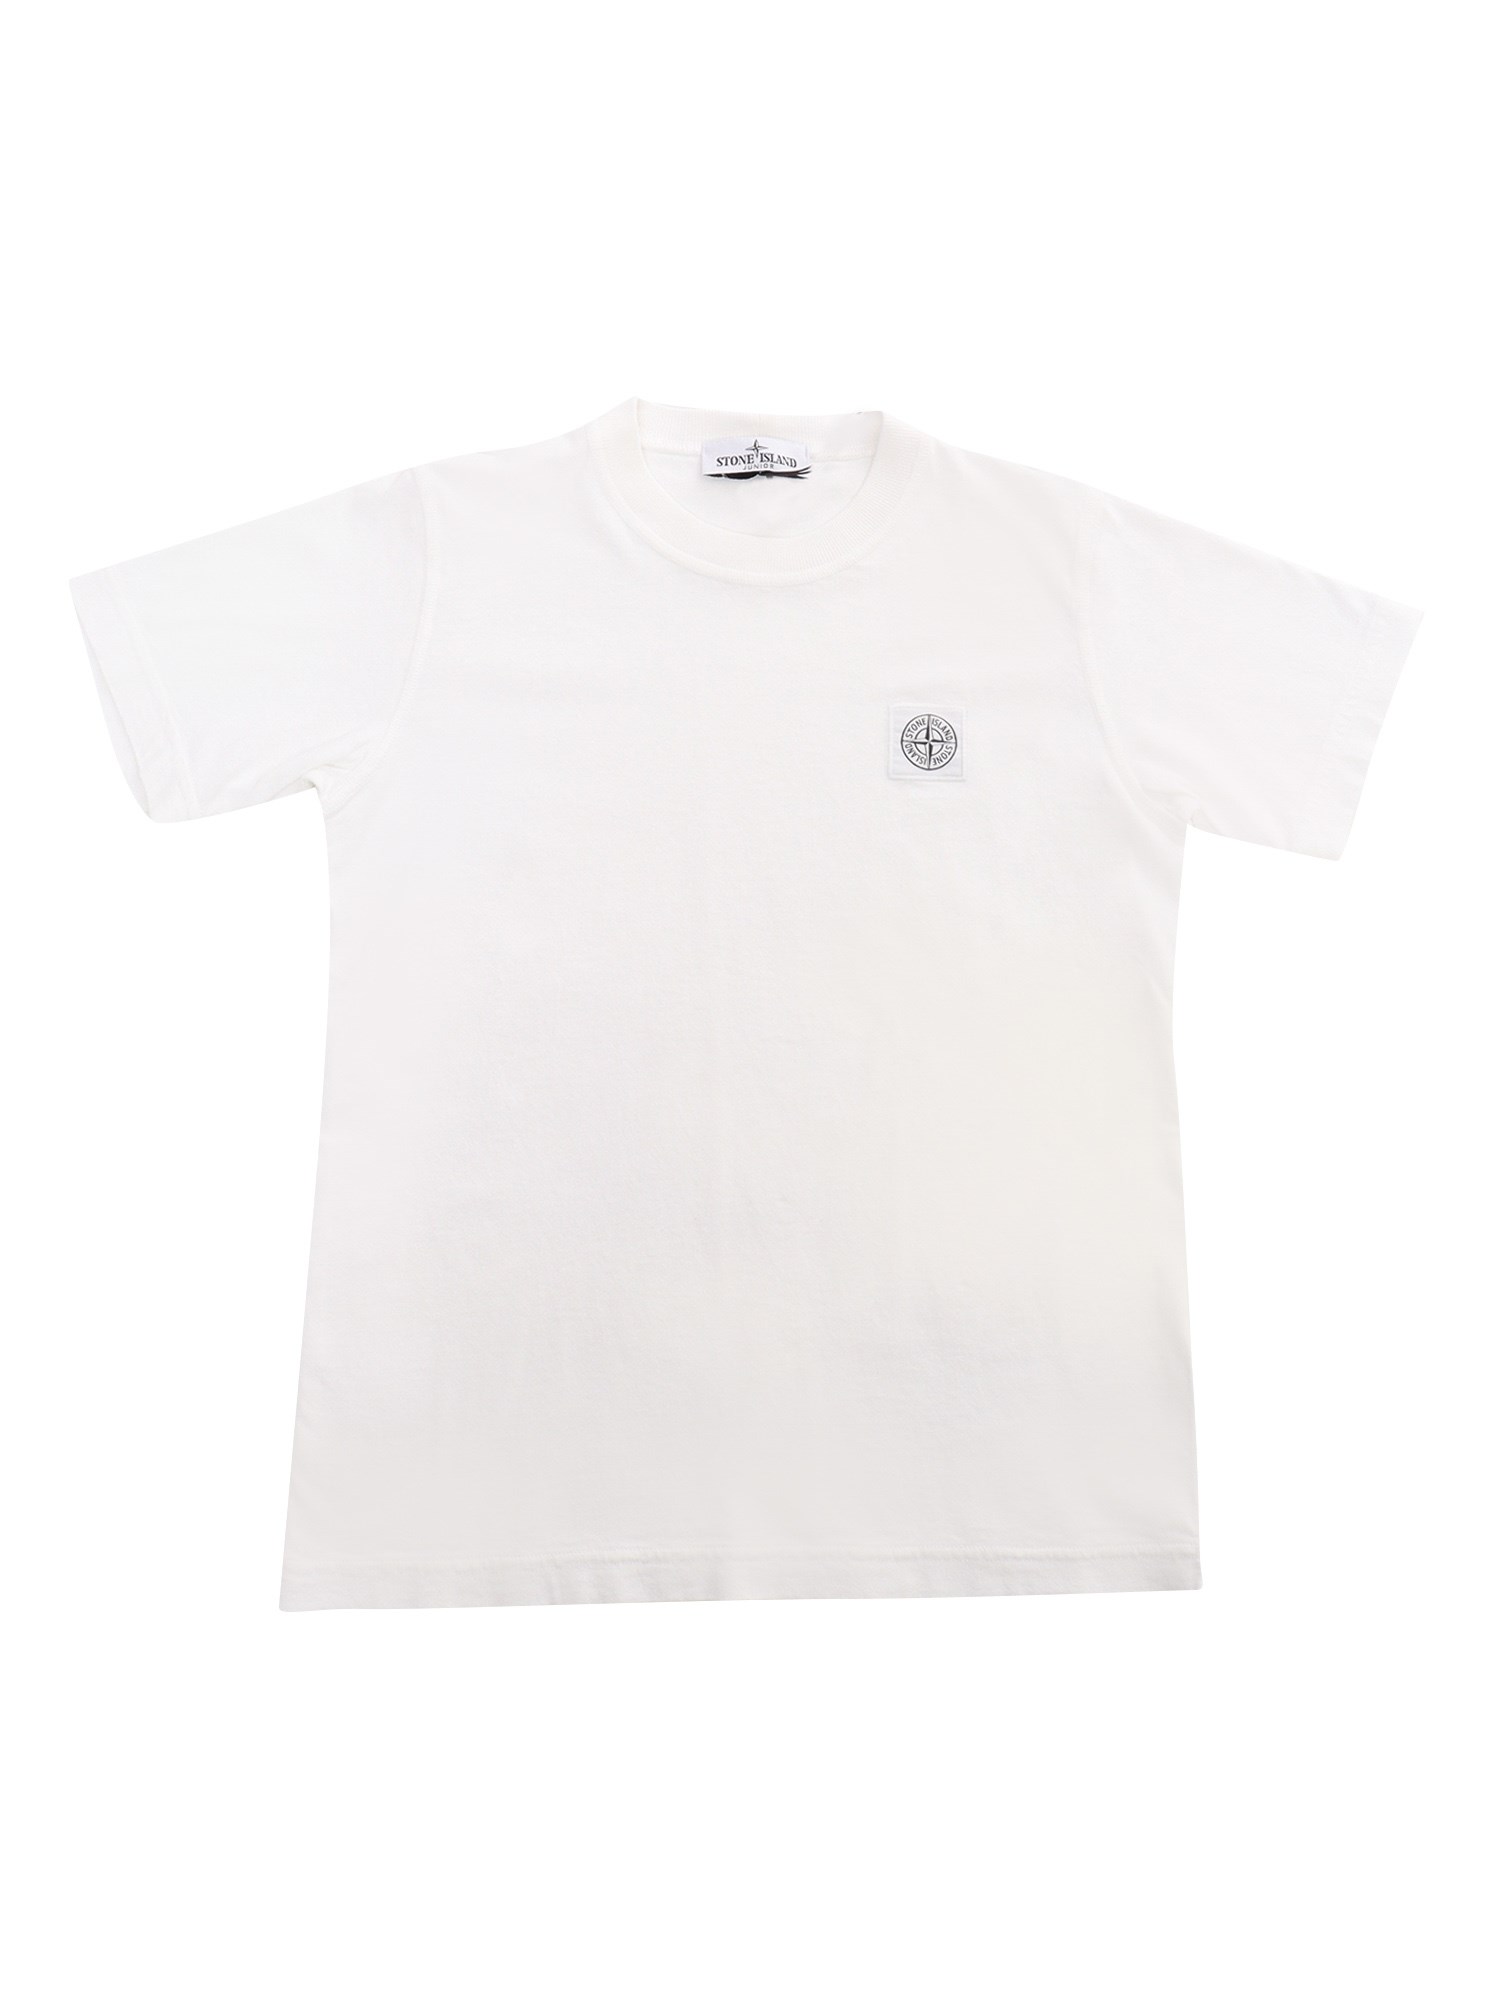 Stone Island White T-shirt With Logo